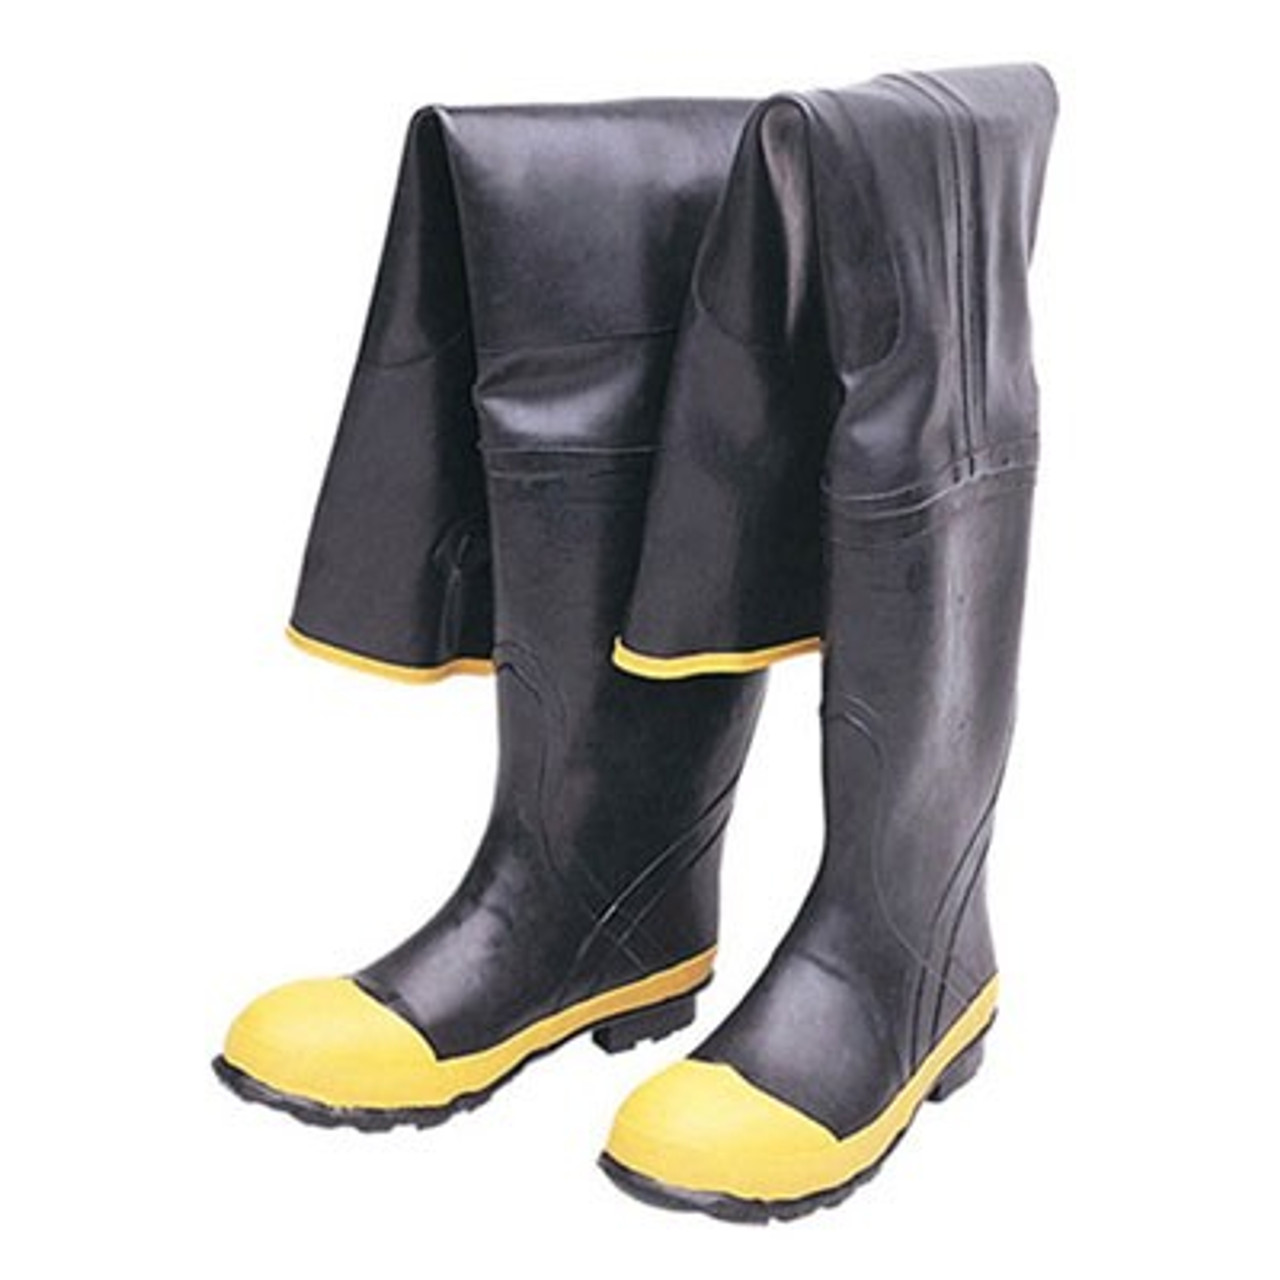 Durawear Rubber boots steel shank size 6